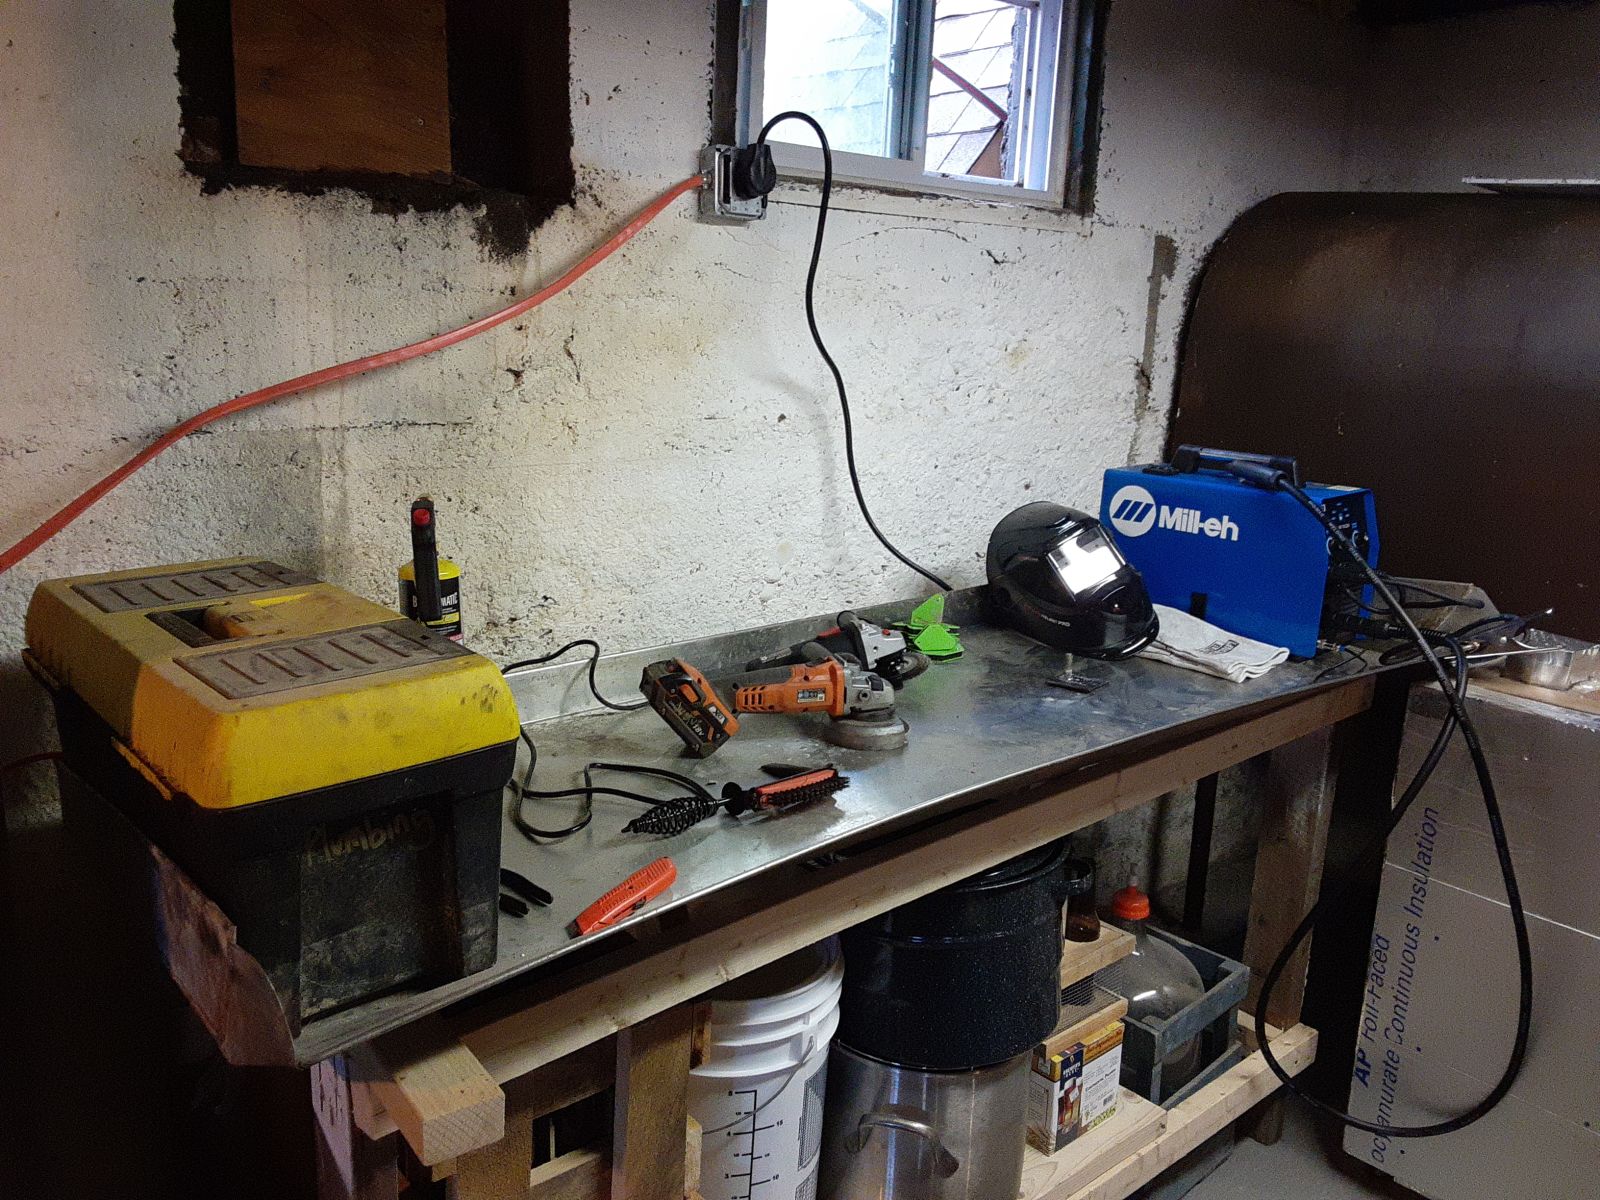 Stainless steel darkroom sink? Or makeshift welding table? You decide